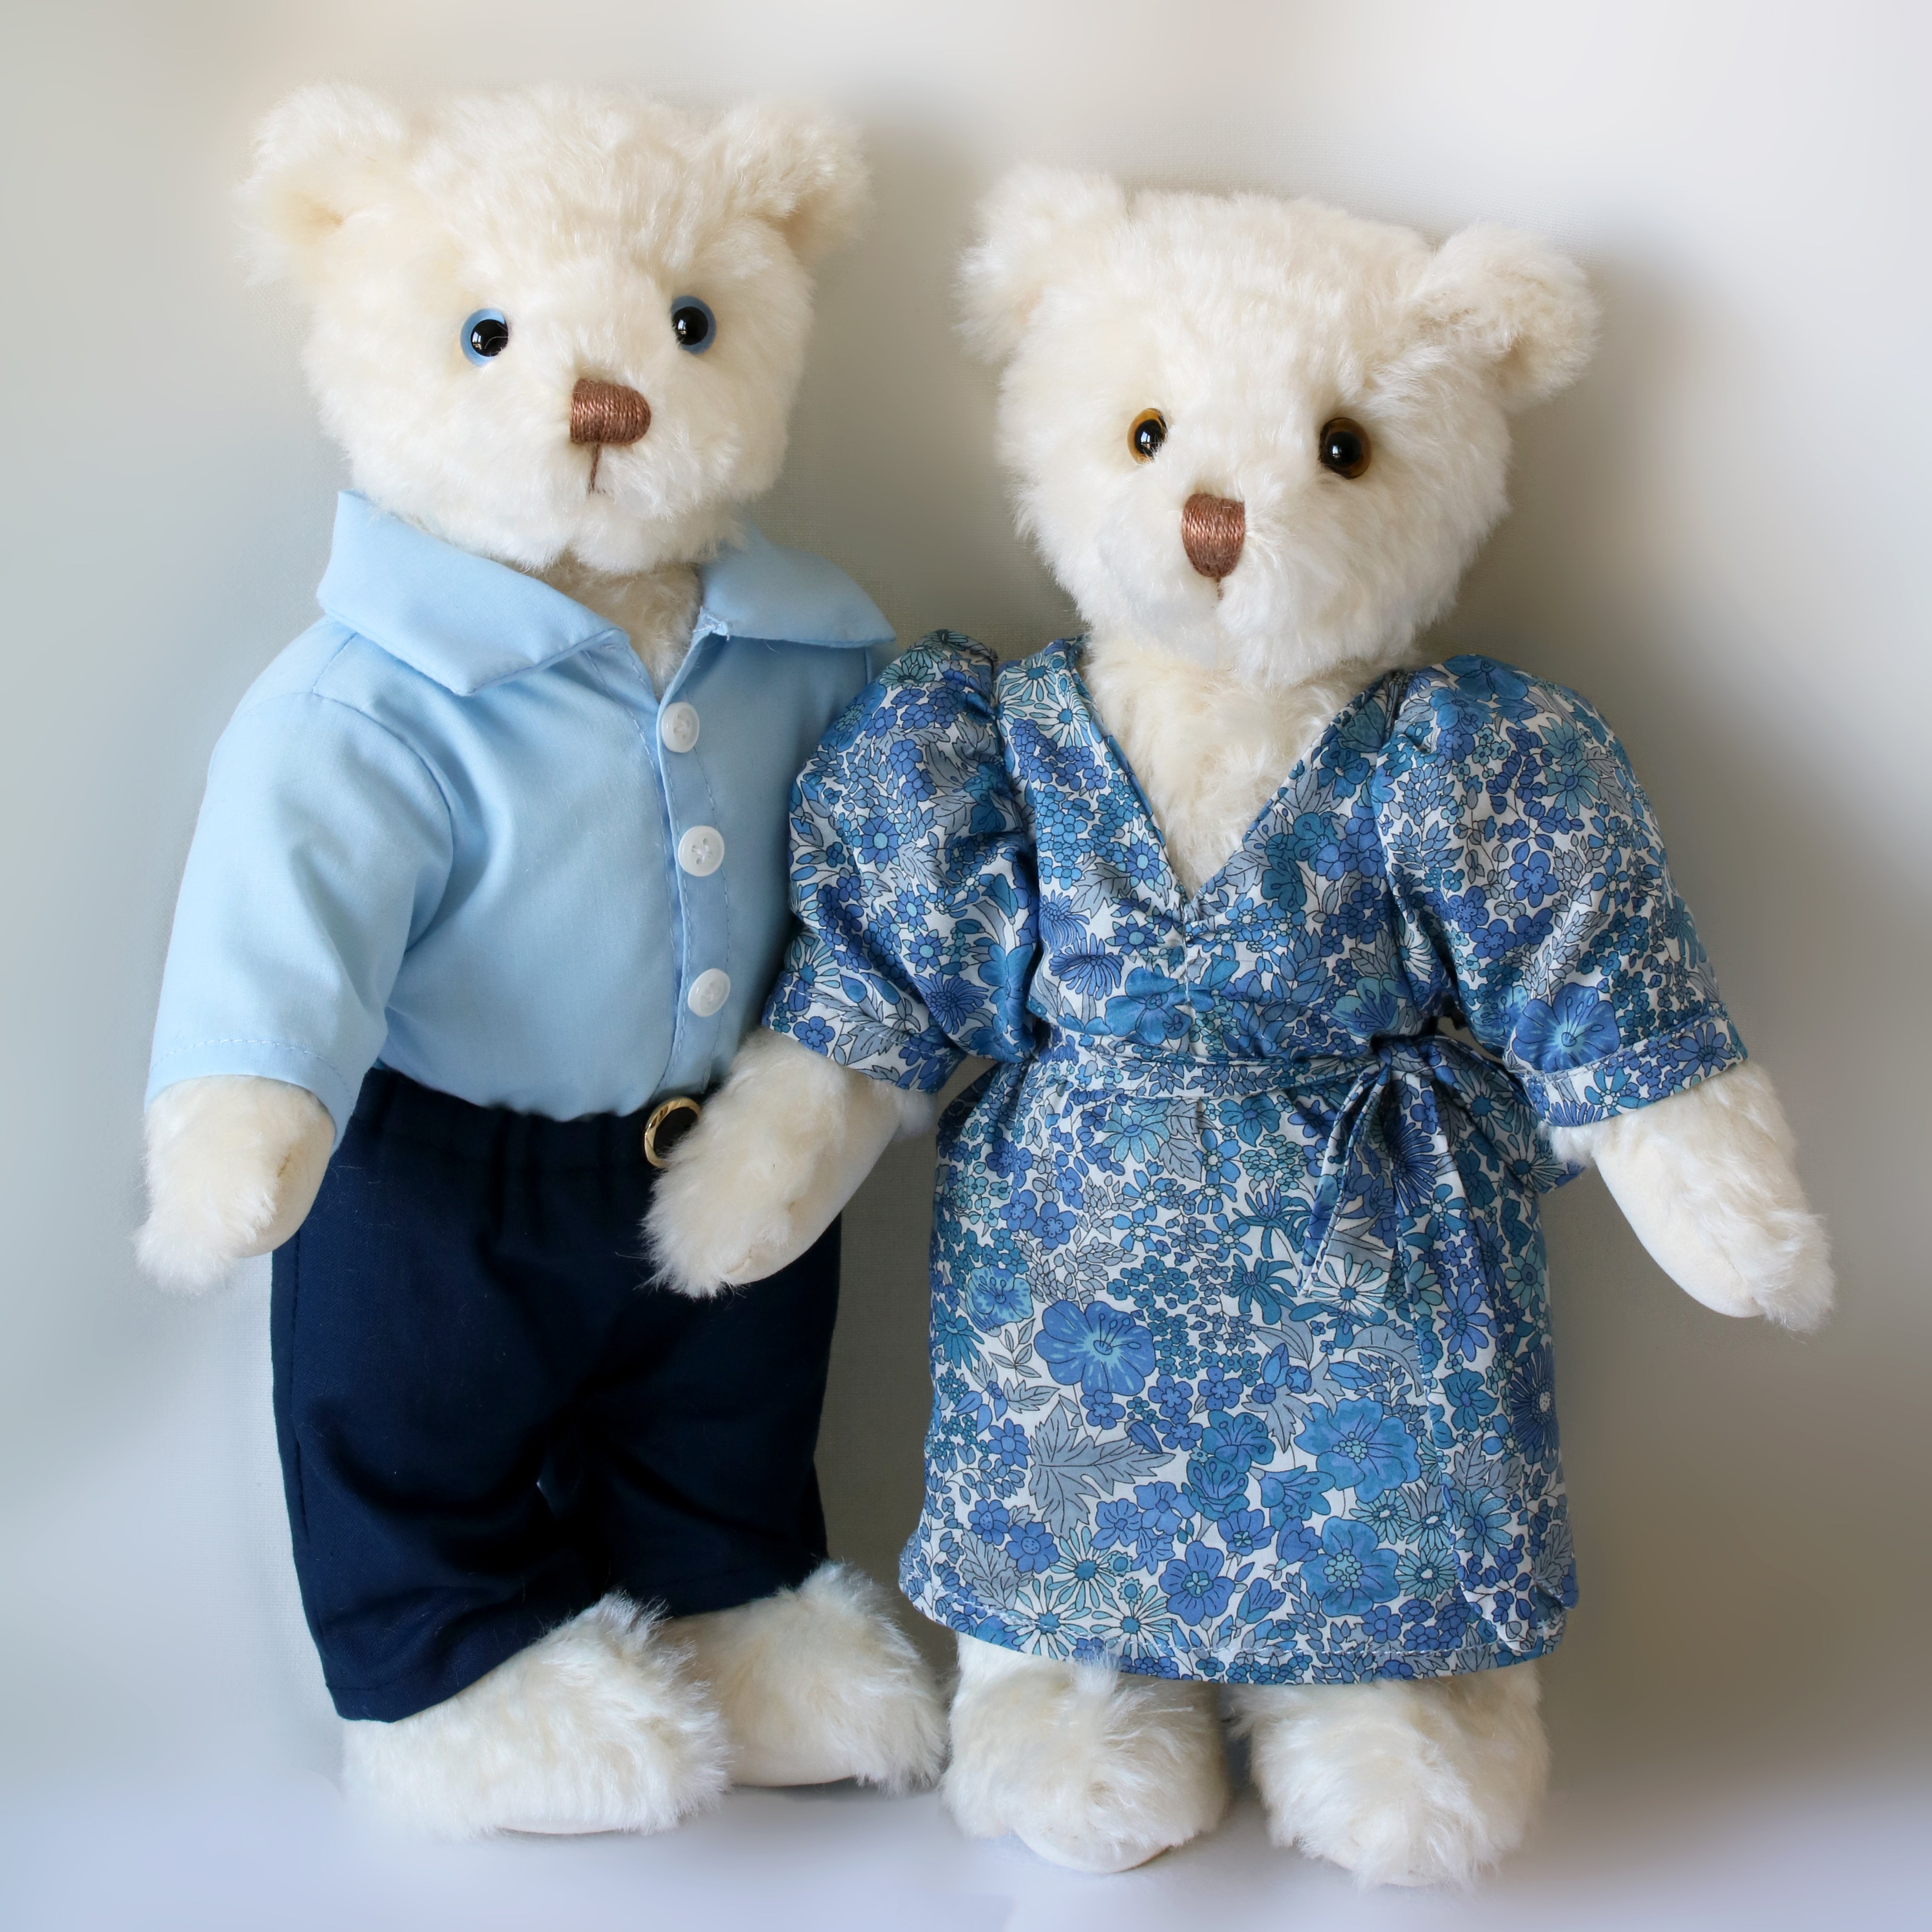 Prince and Princess of Wales Family Bears the Bear by Canterbury Bears